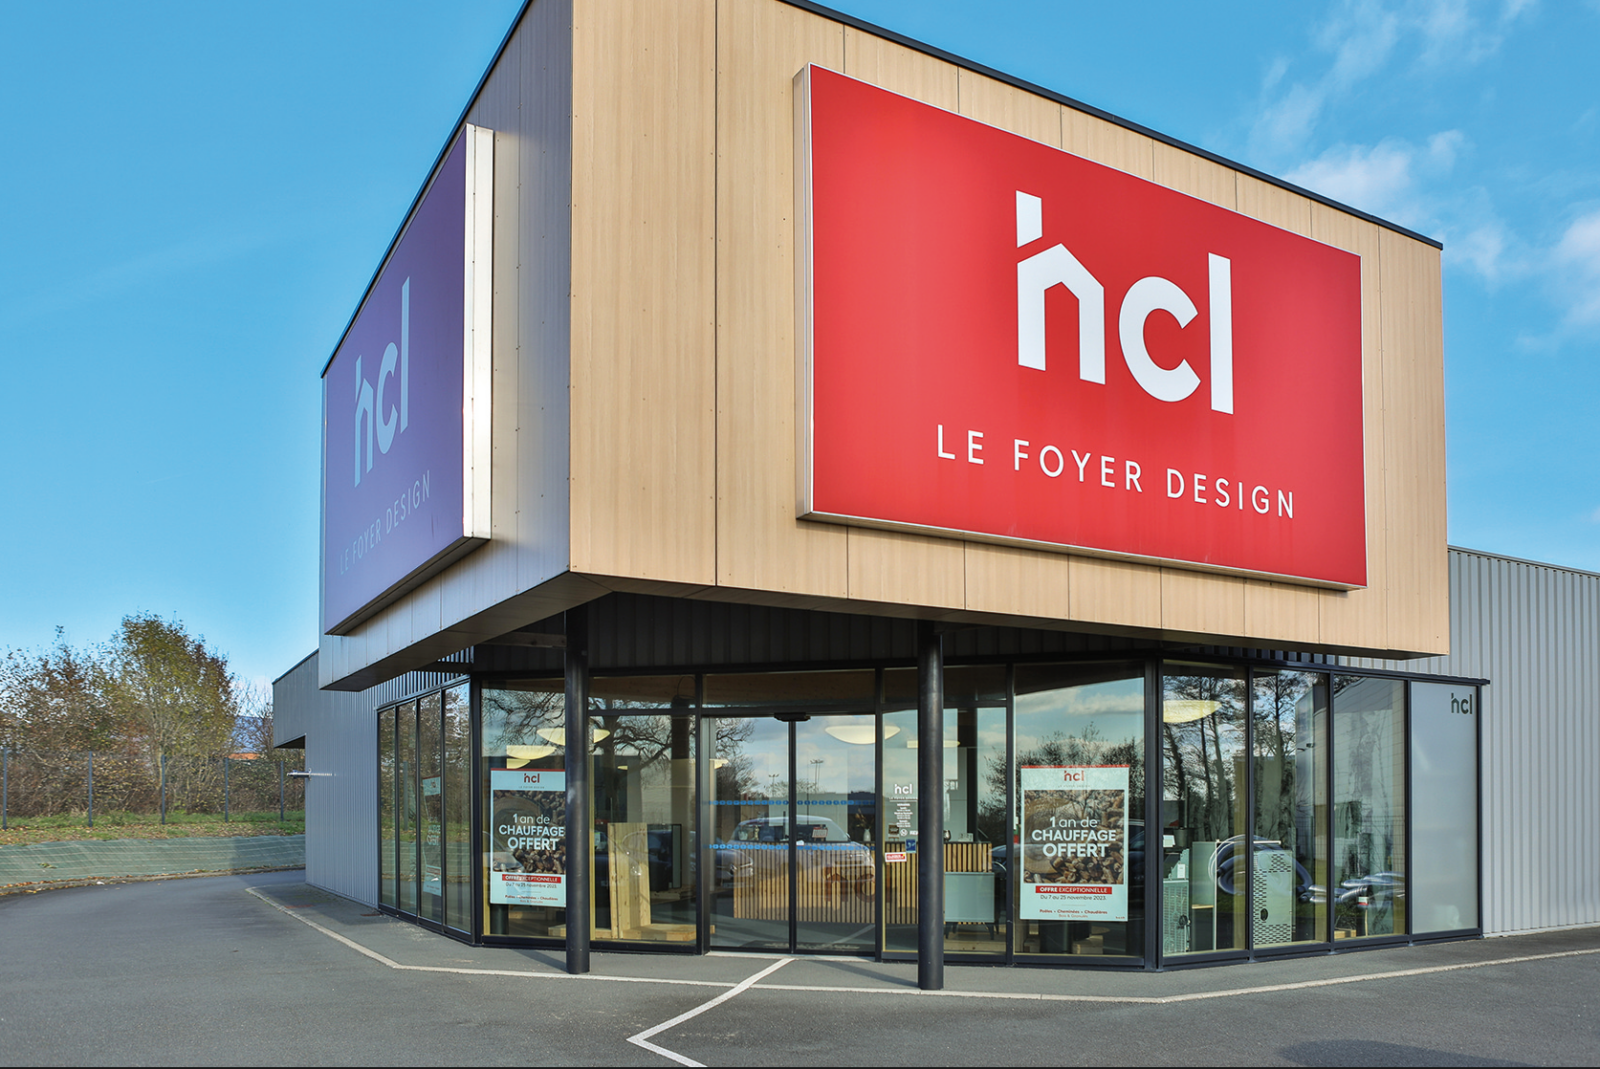 HCL Le Foyer Design